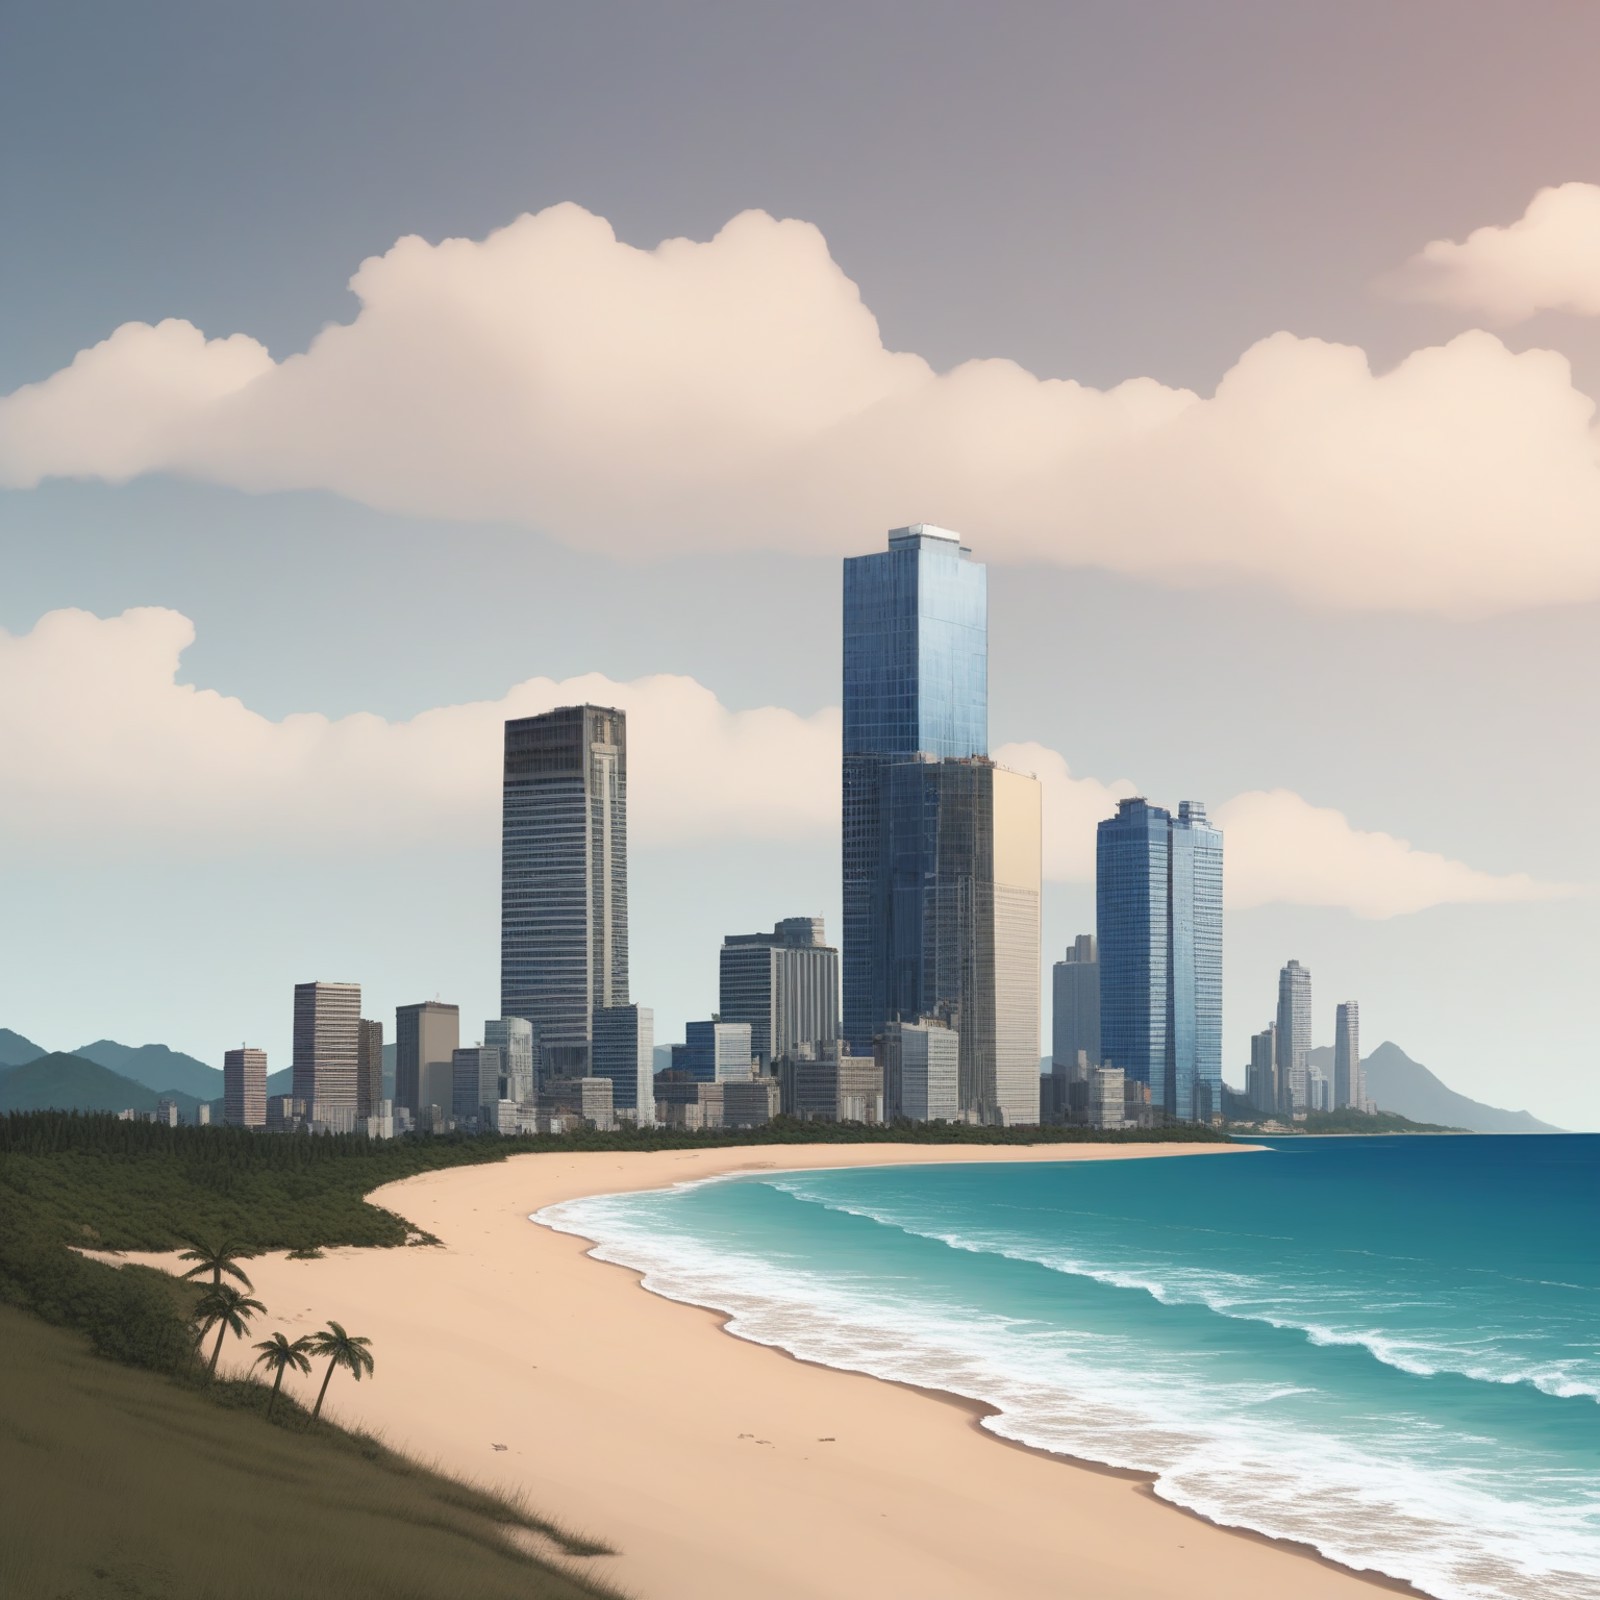 best quality,masterpiece,
landscape,sandy beach,seaside,ocean,sky,cloud,nature,gulf city,Skyscraper,